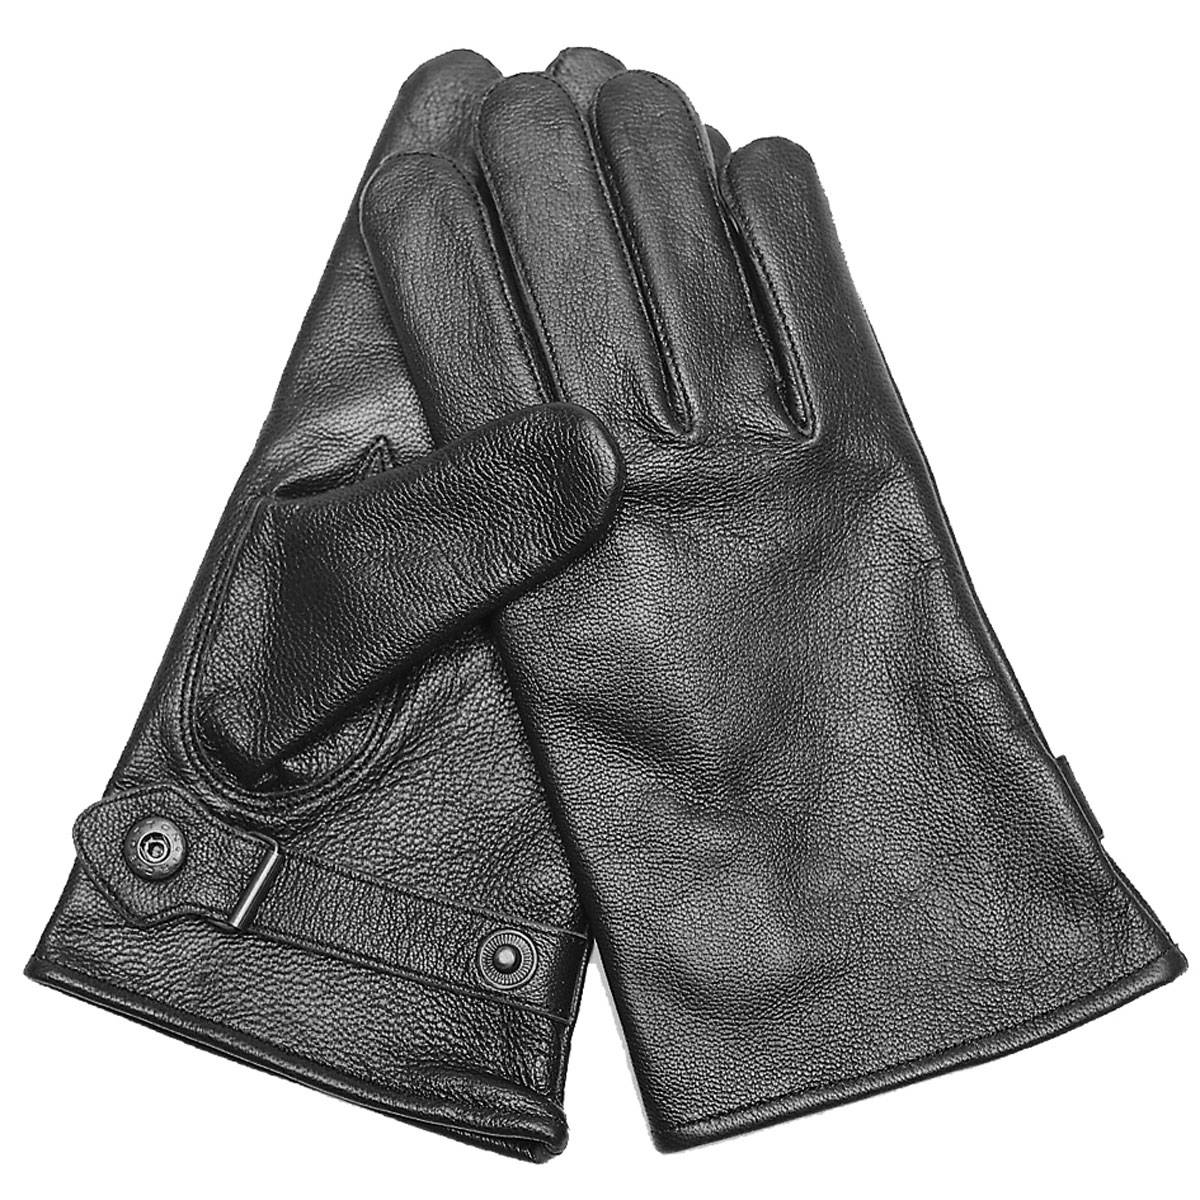 NEU Bundeswehr Echtleder Handschuhe gefüttert grau schwarz S-2XL 7-11 